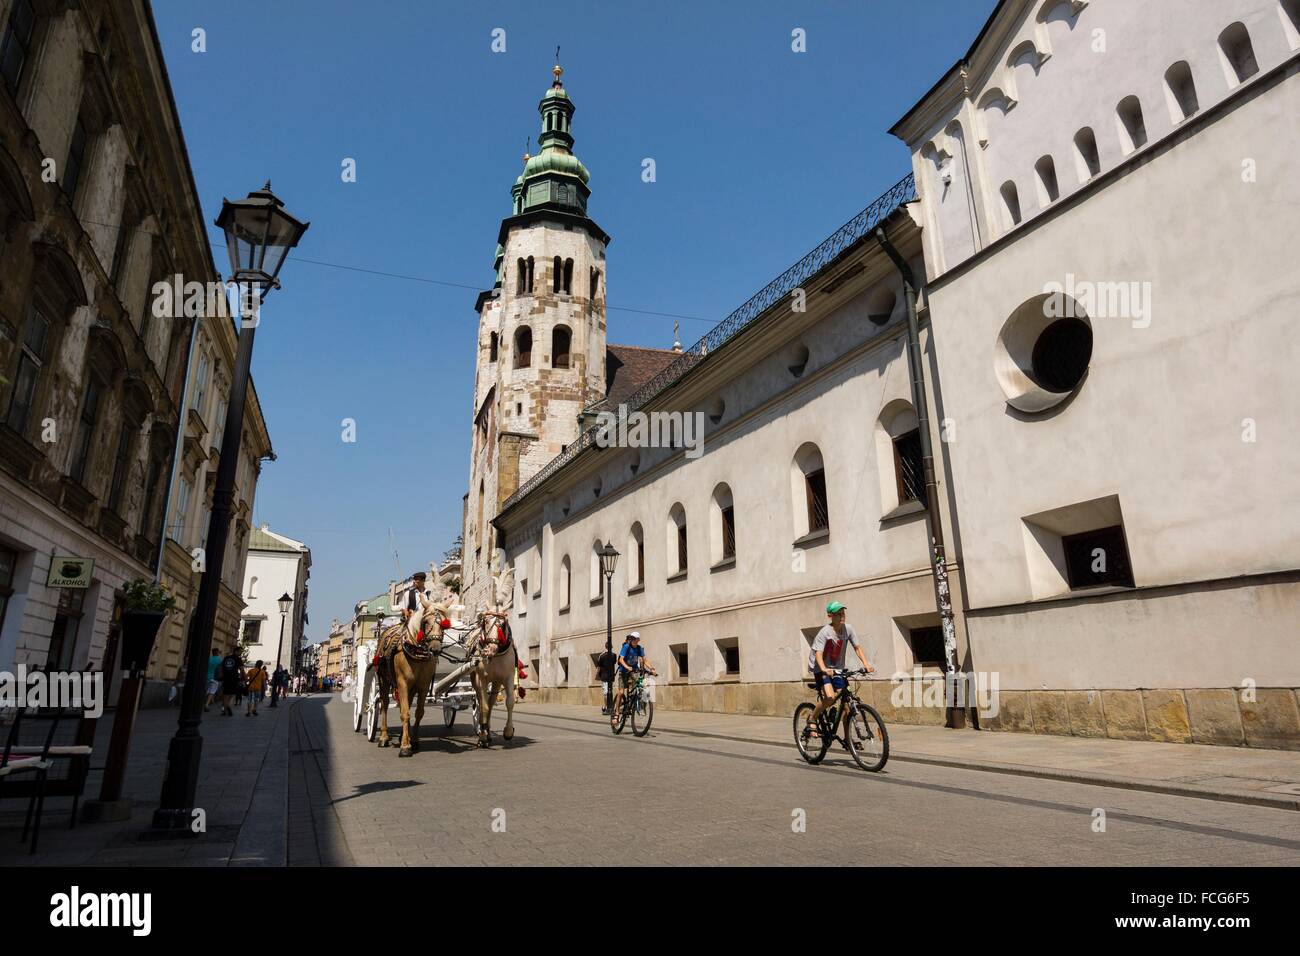 calle Glodzca y iglesia romanica de San Andres, construida entre 1079 y 1098, Kraków, Polonia, eastern europe. Stock Photo